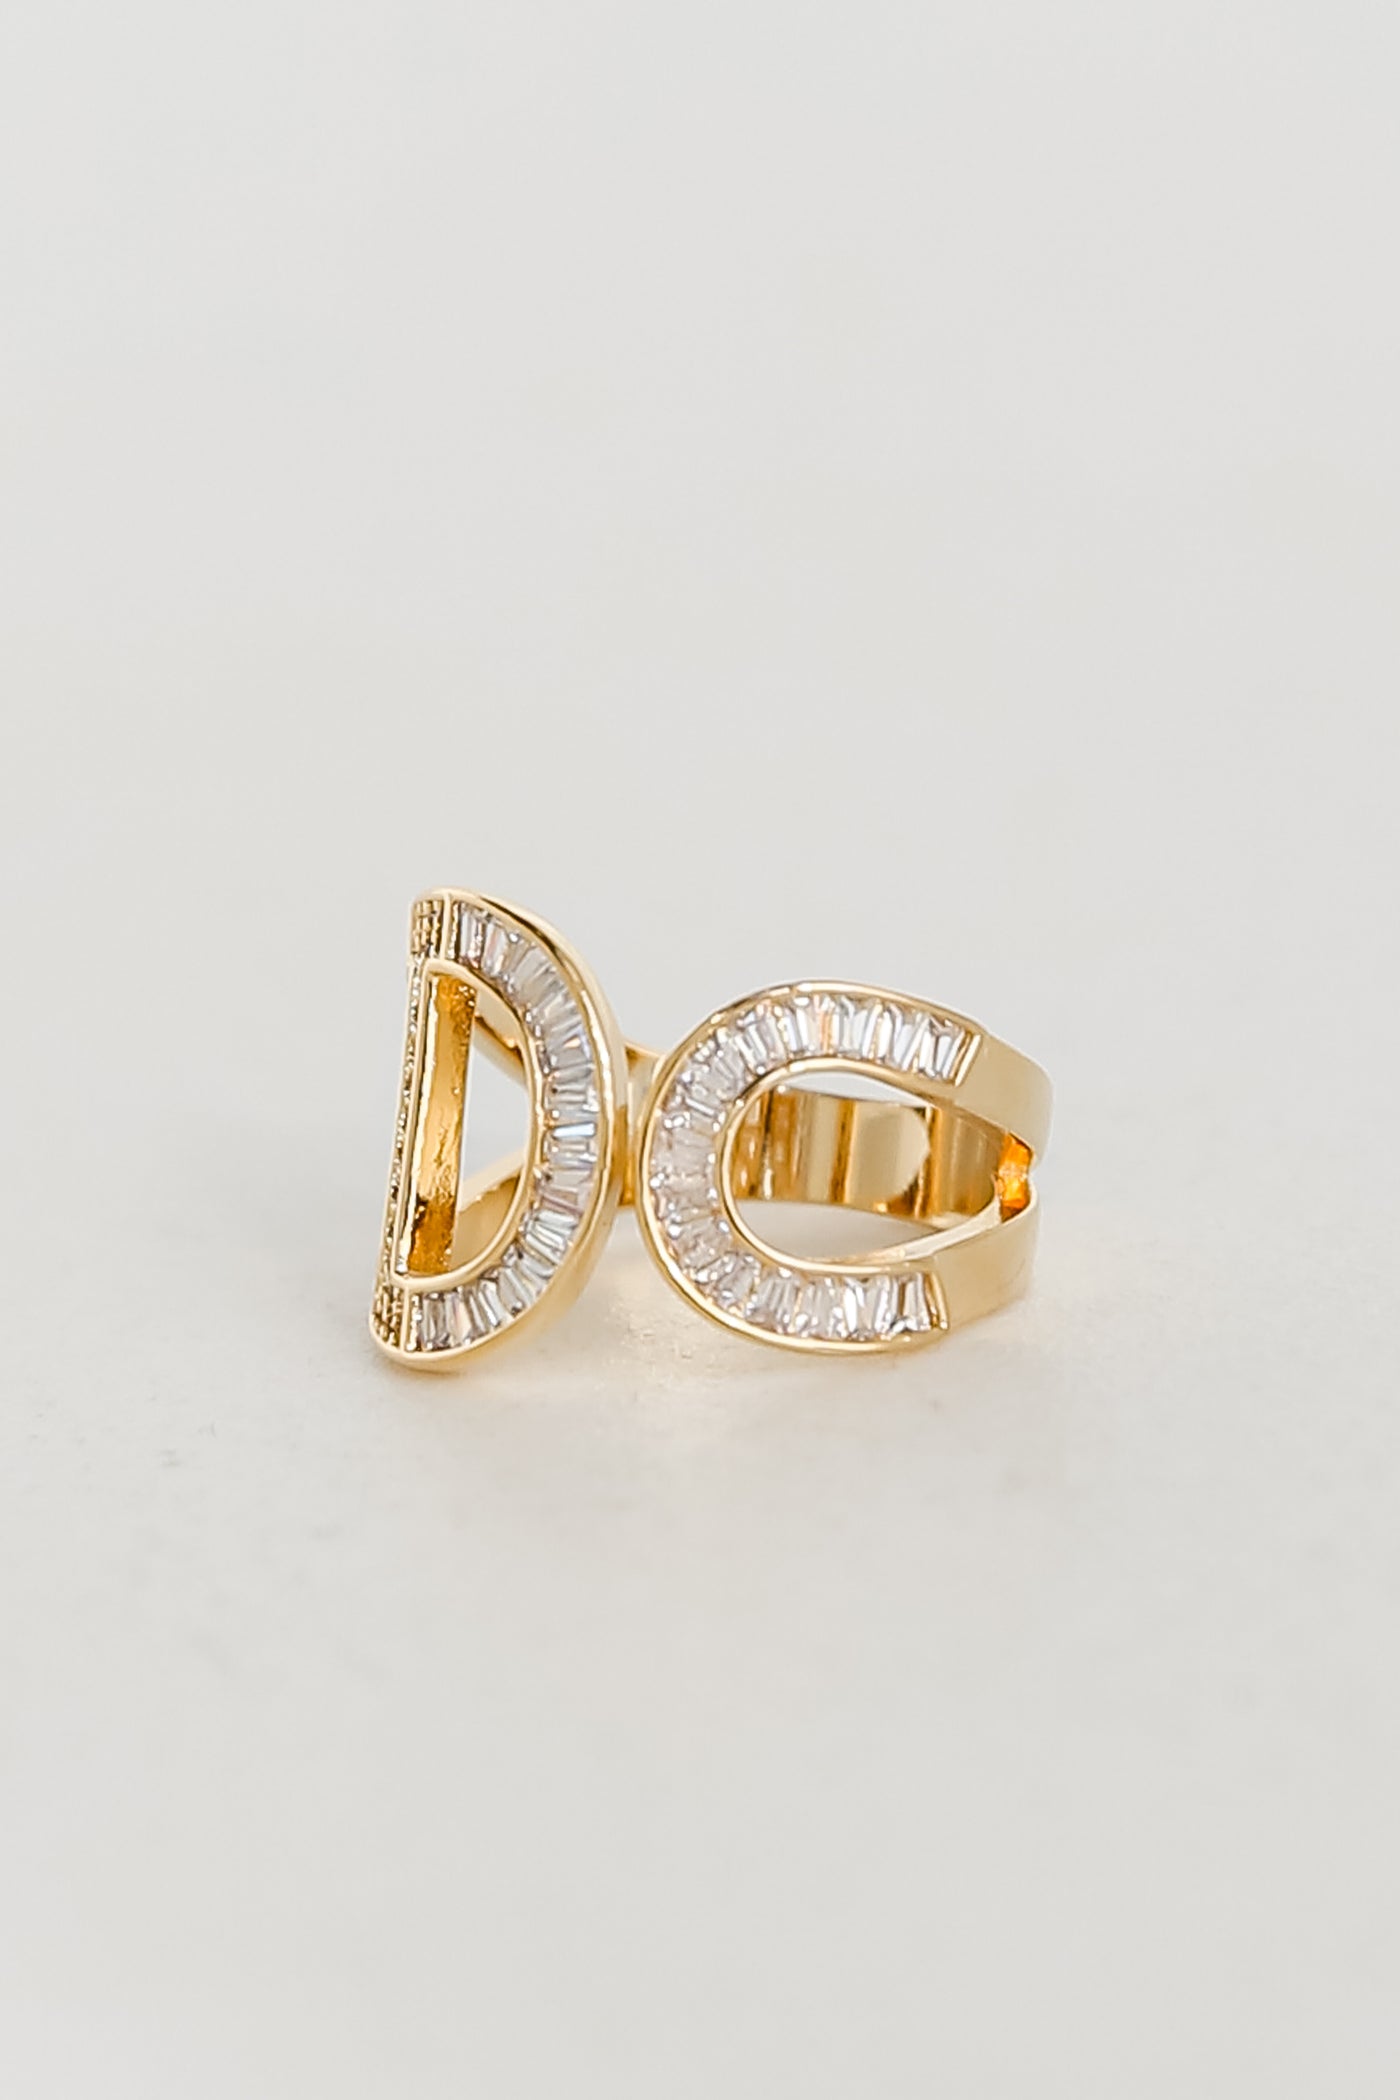 Gold Rhinestone "I Do" Ring